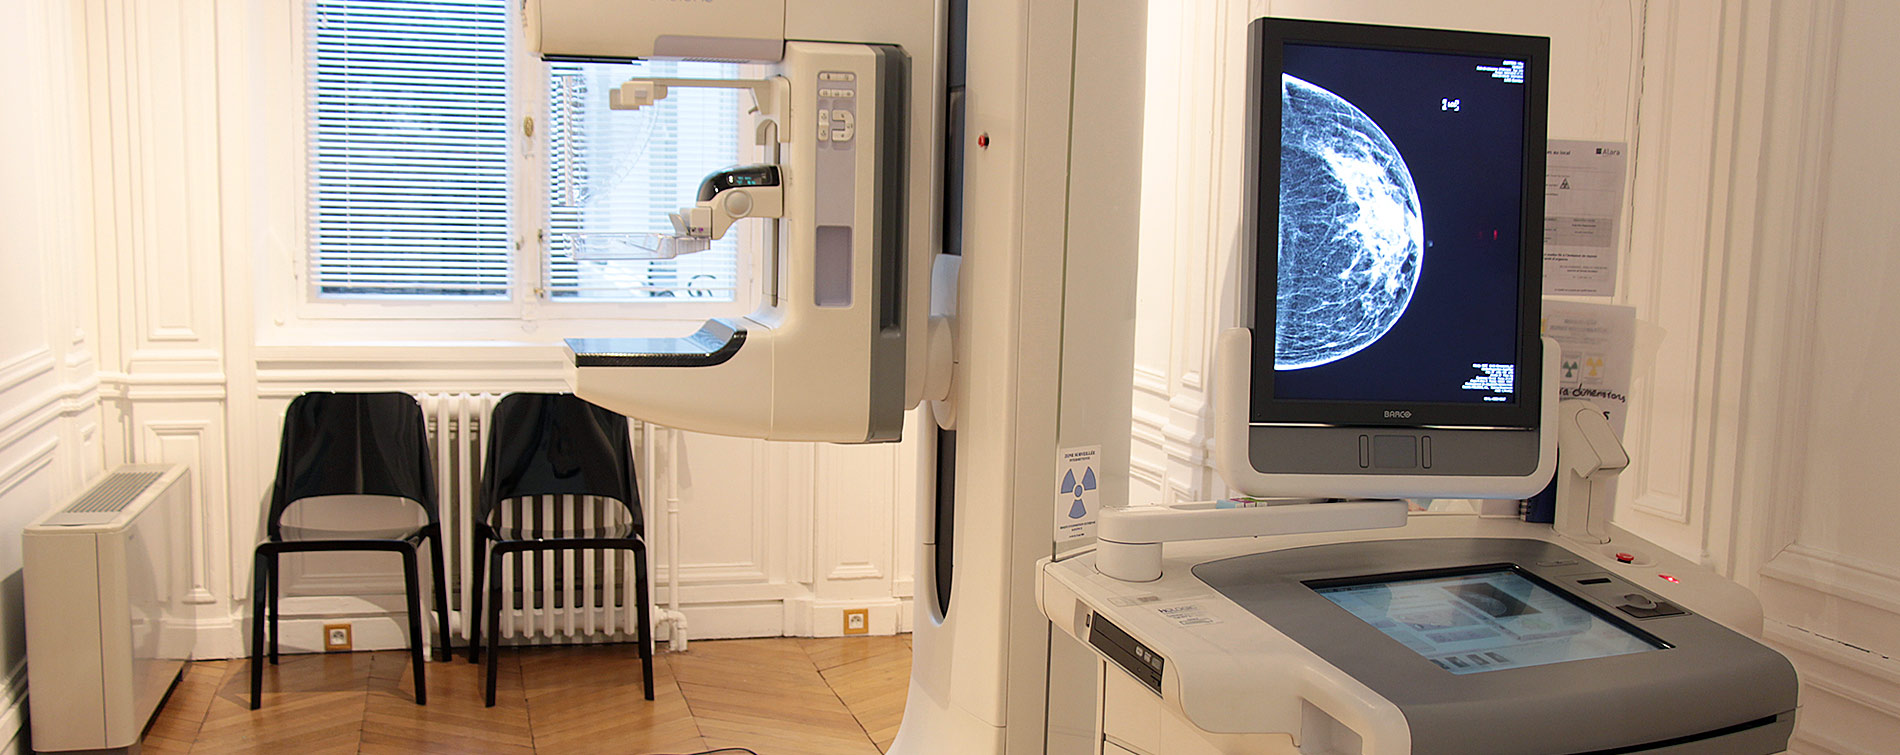 Mammographie Tomosynthèse 3D Paris 16